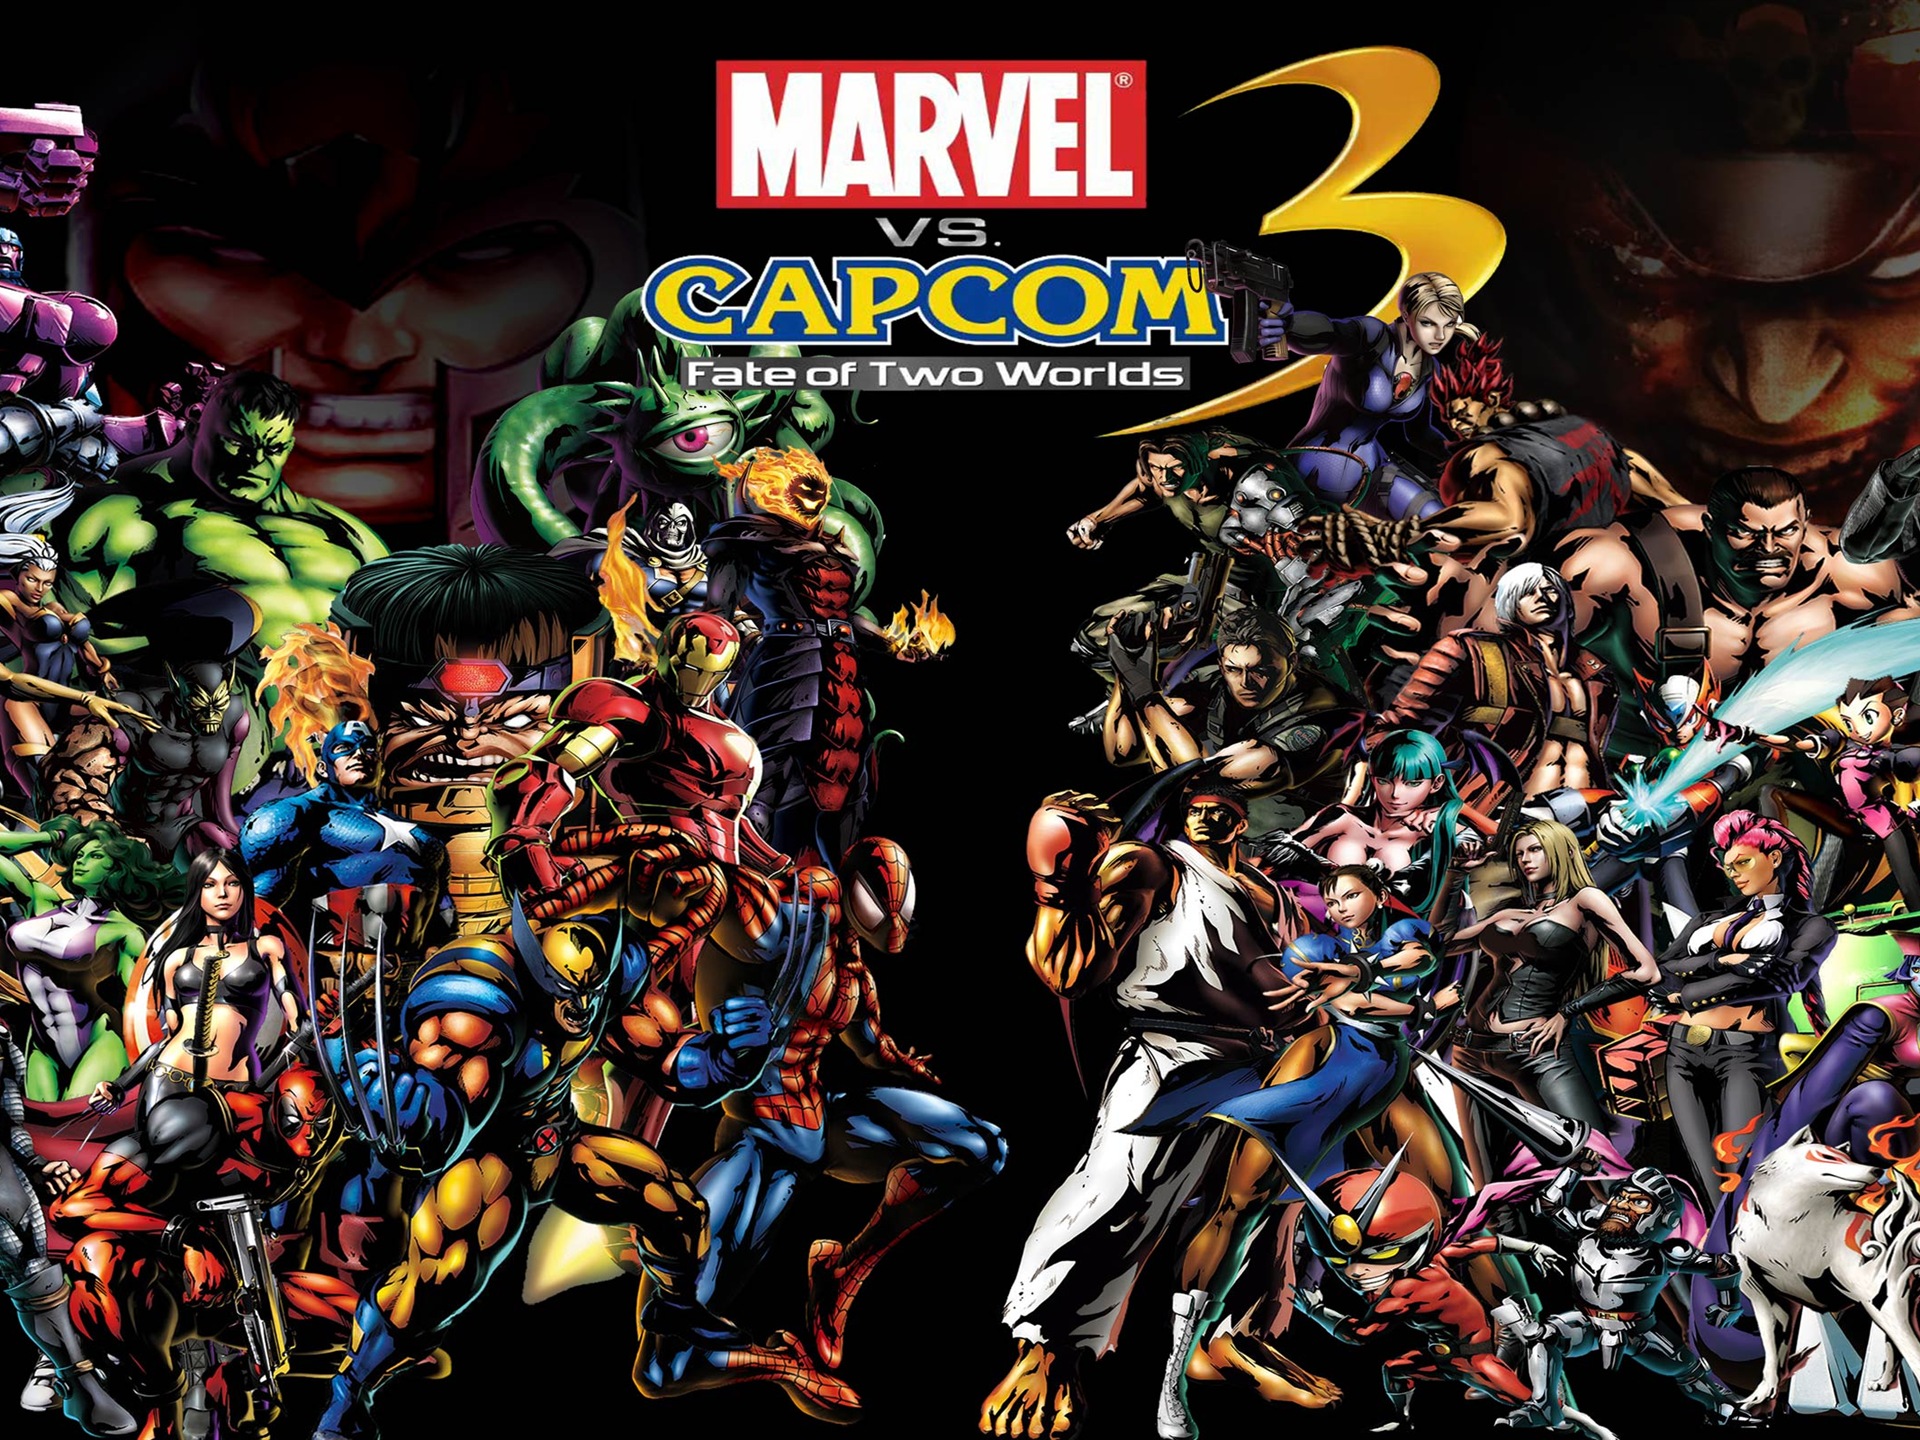 Marvel VS. Capcom 3: Fate of Two Worlds 漫画英雄VS.卡普空3 高清游戏壁纸1 - 1920x1440